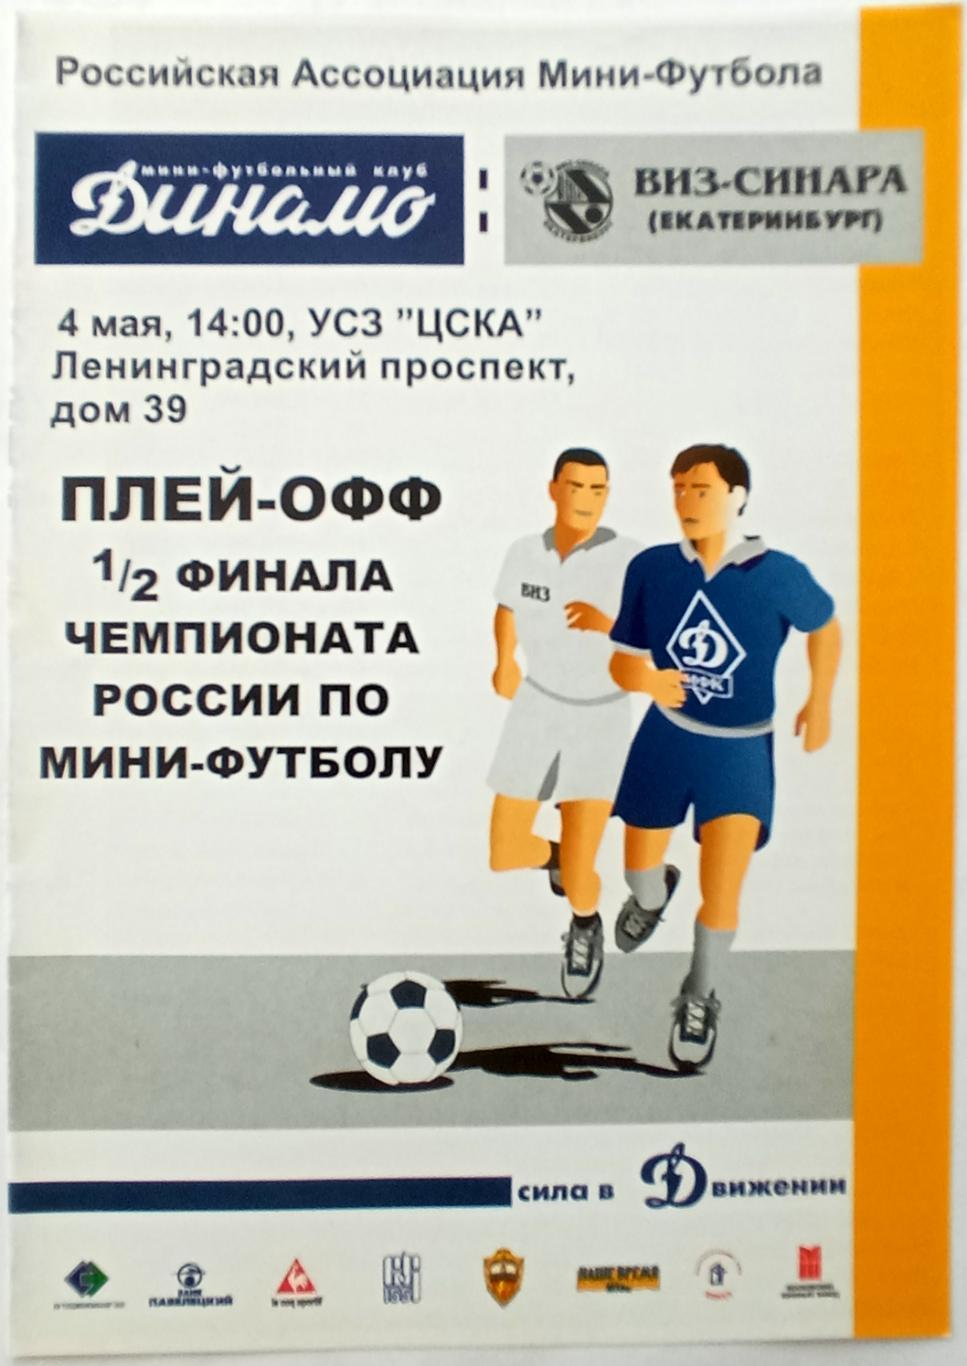 Динамо Москва – ВИЗ-Синара Екатеринбург 04.05.2003 плей-офф 1/2 финала